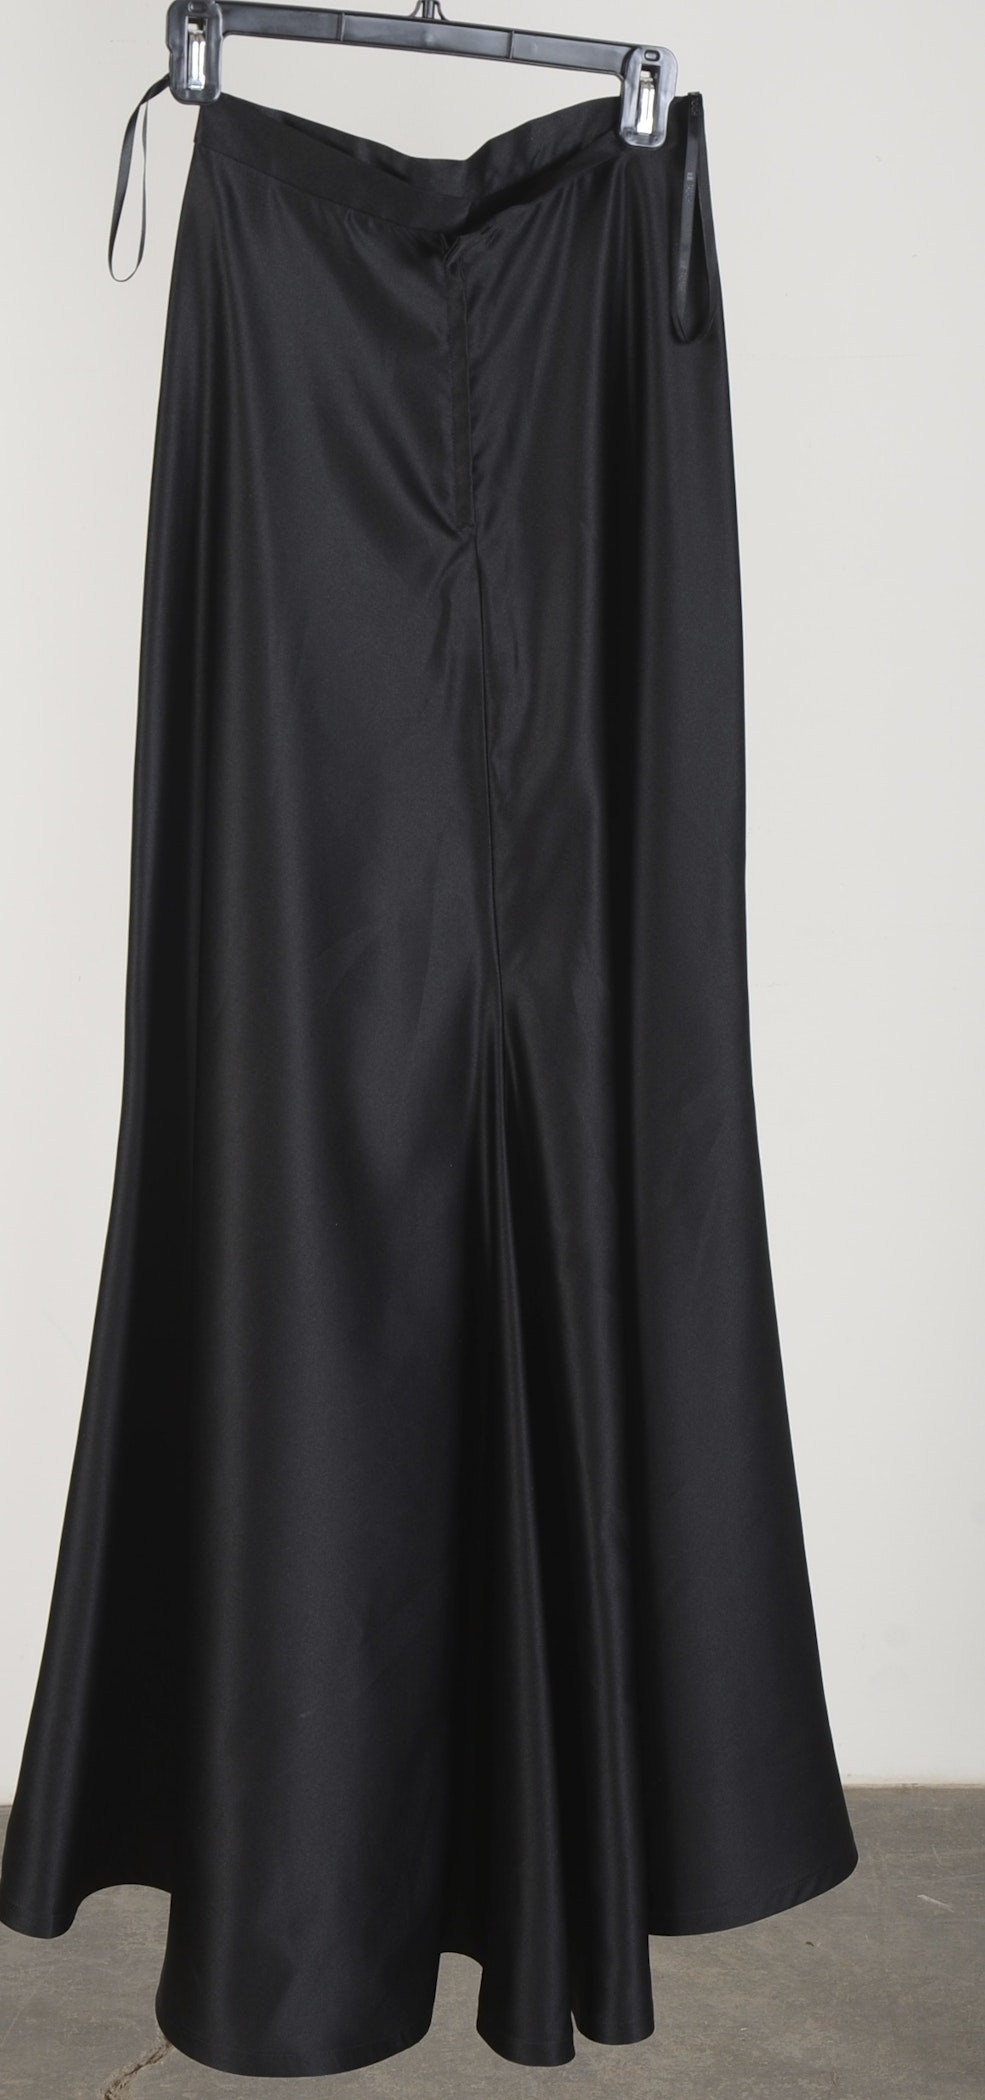 Bebe Black 100% Cashmere Cardigan and Tadashi Full Length Black Skirt ...